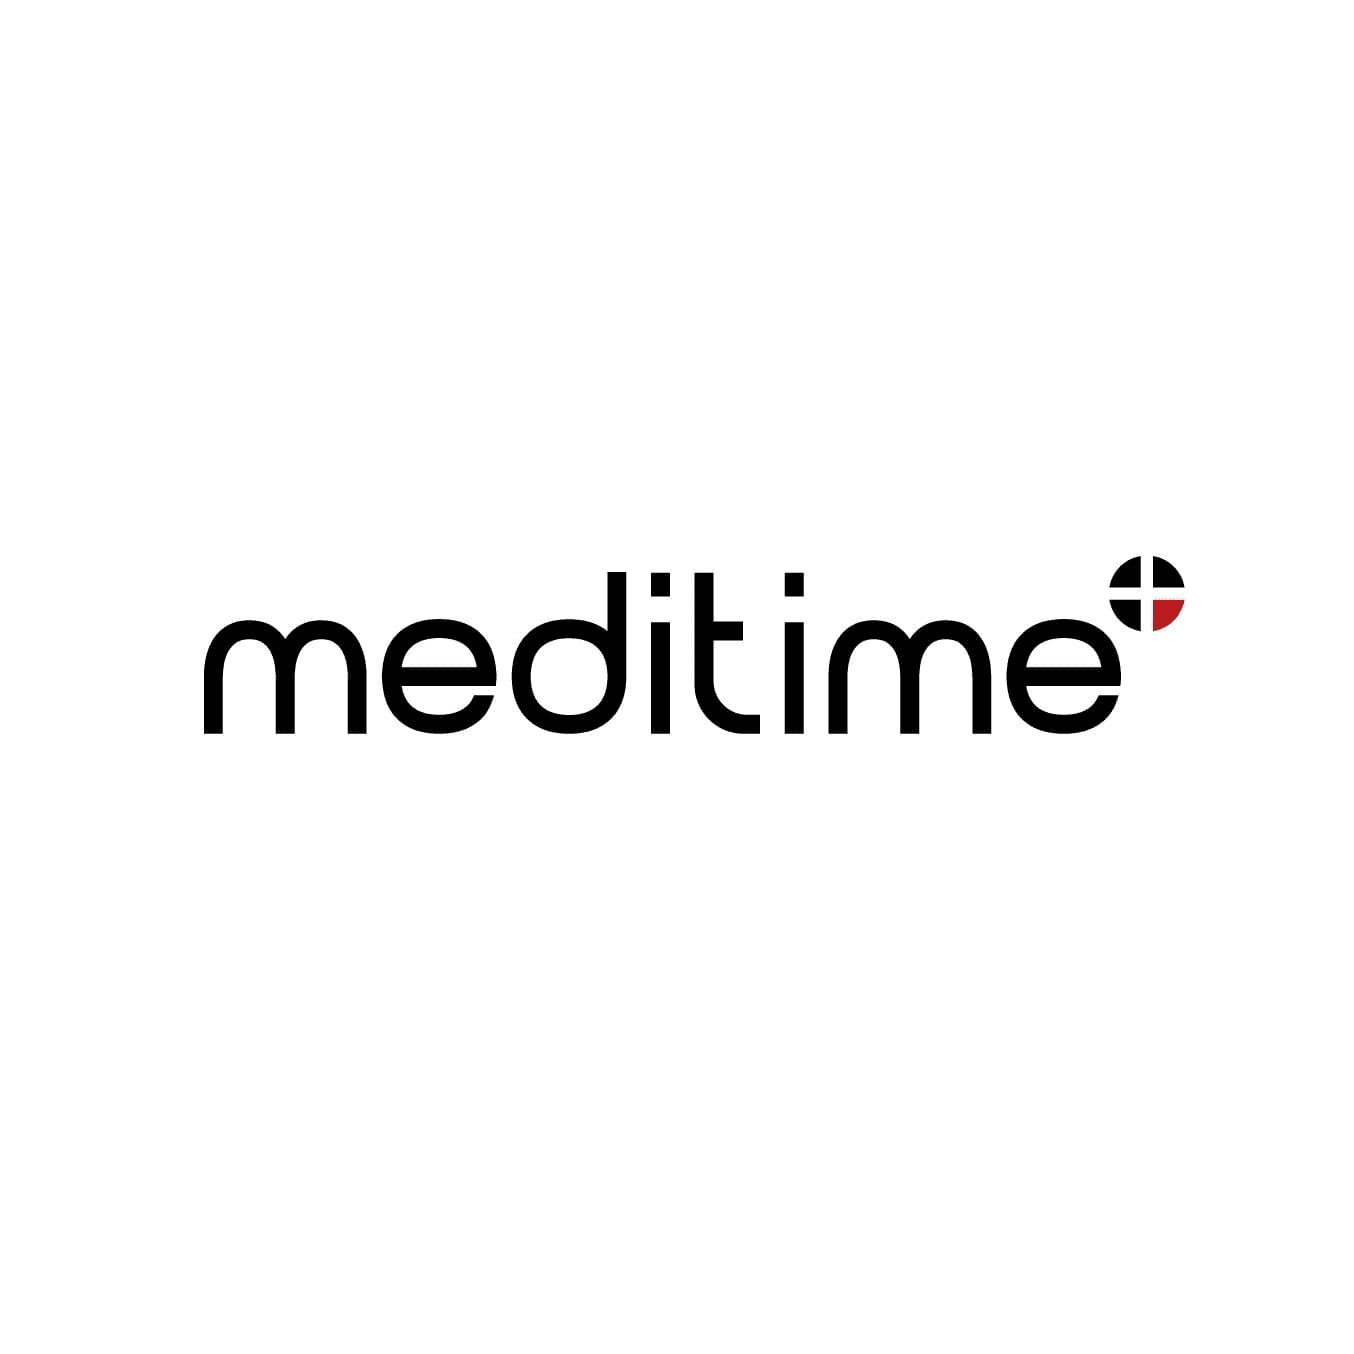 Meditime logo